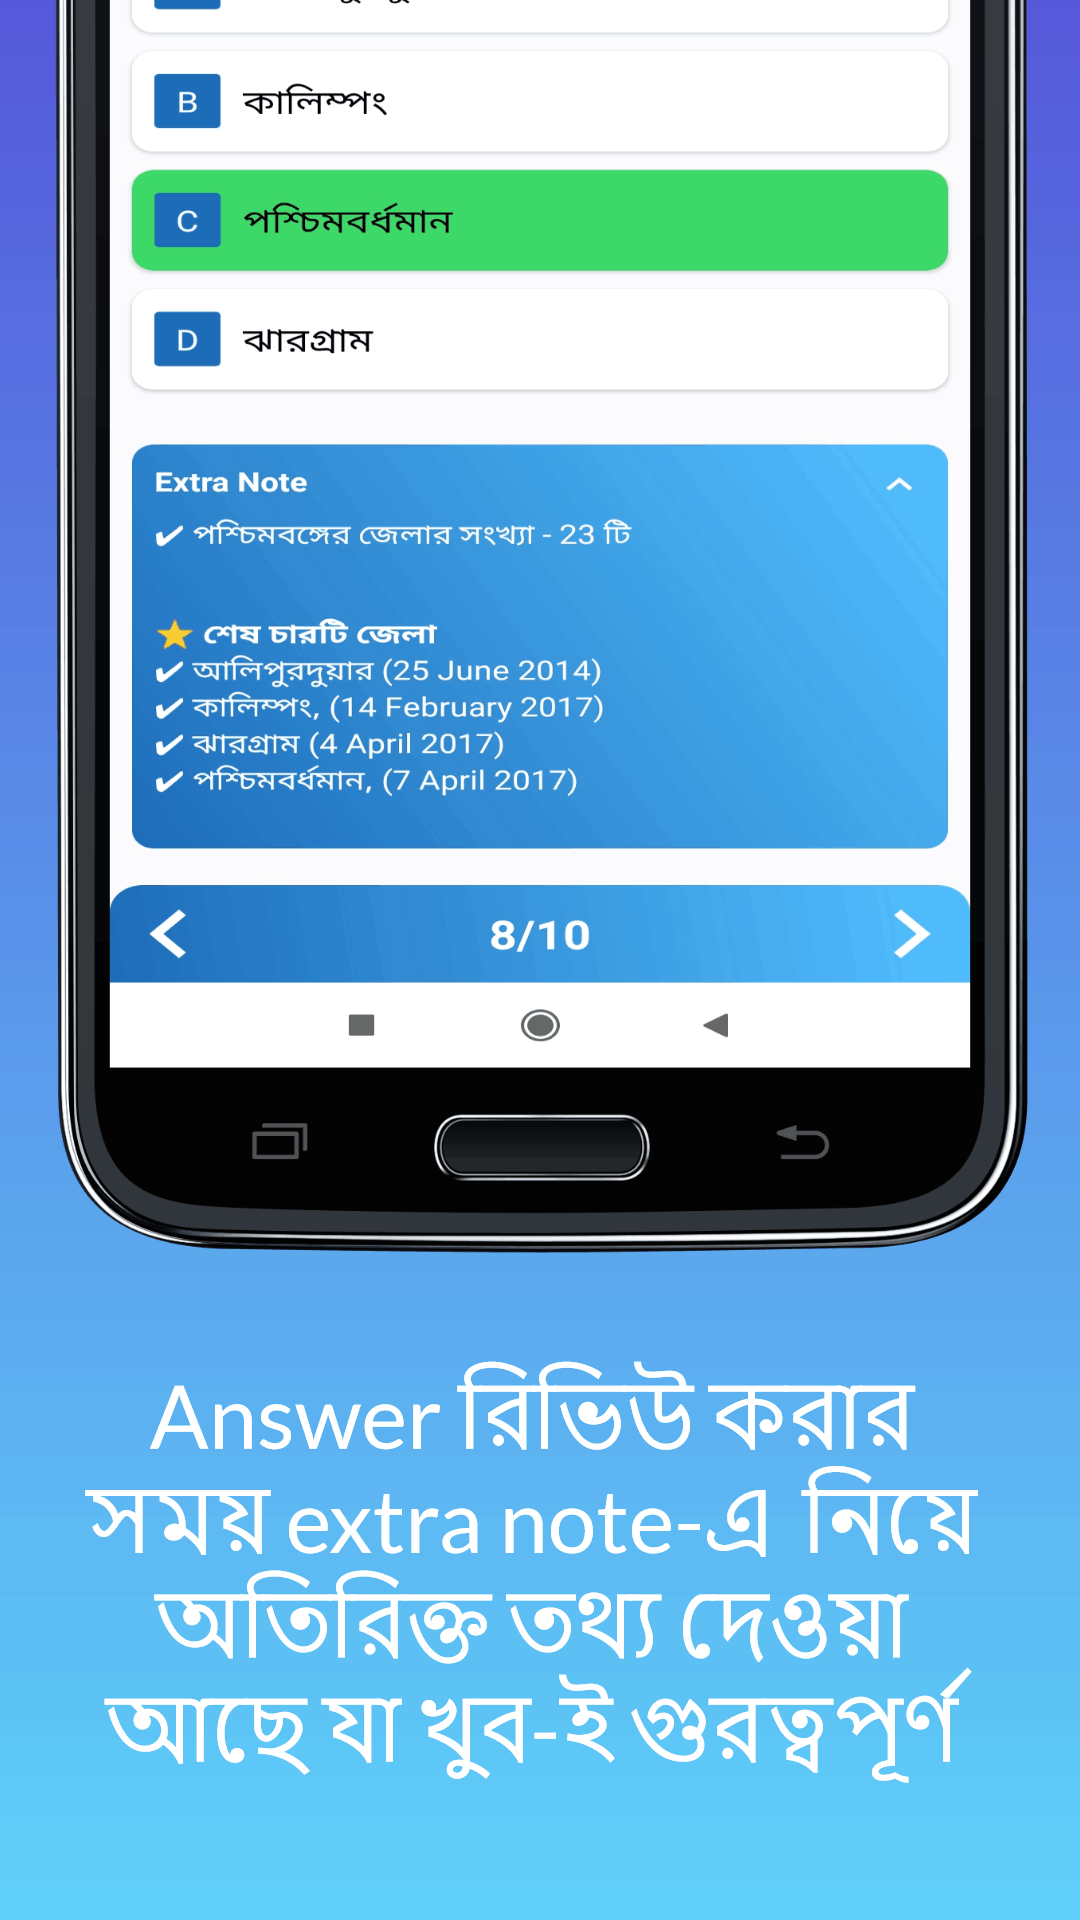 Bengali GK Quiz App for Govt. job preparation